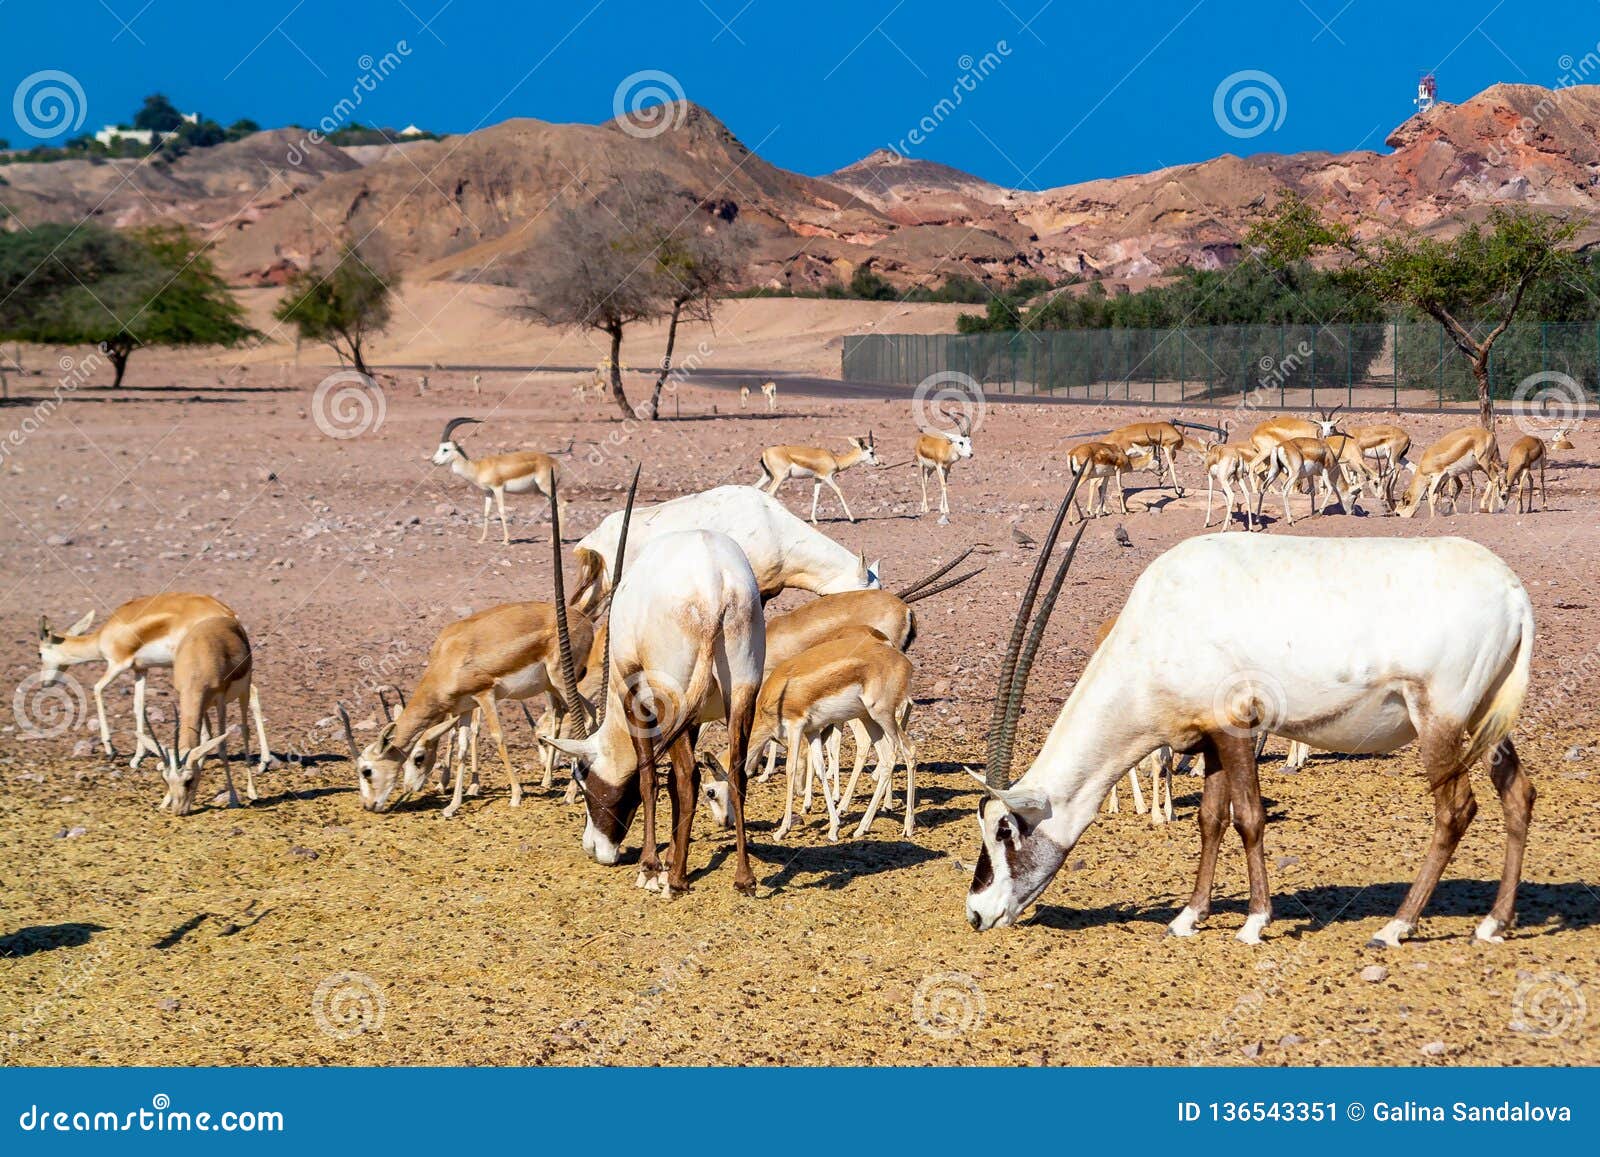 Antelope Group in a Safari Park on the Island of Sir Bani Yas United Arab Emirates Stock Image